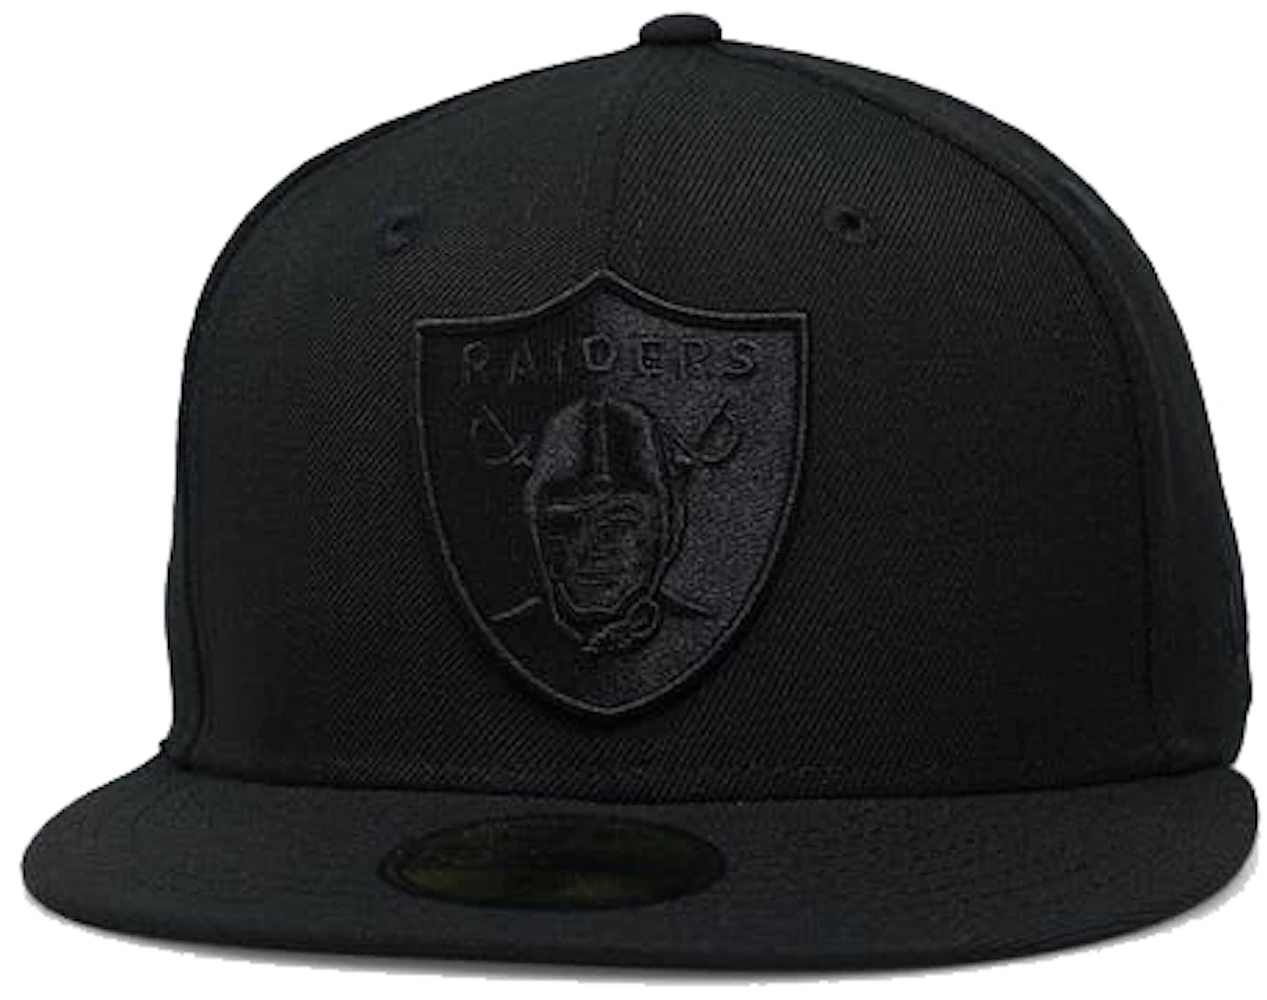 New Era Las Vegas Raiders 59Fifty Fitted Hat Black/Black Men's - FW21 - US